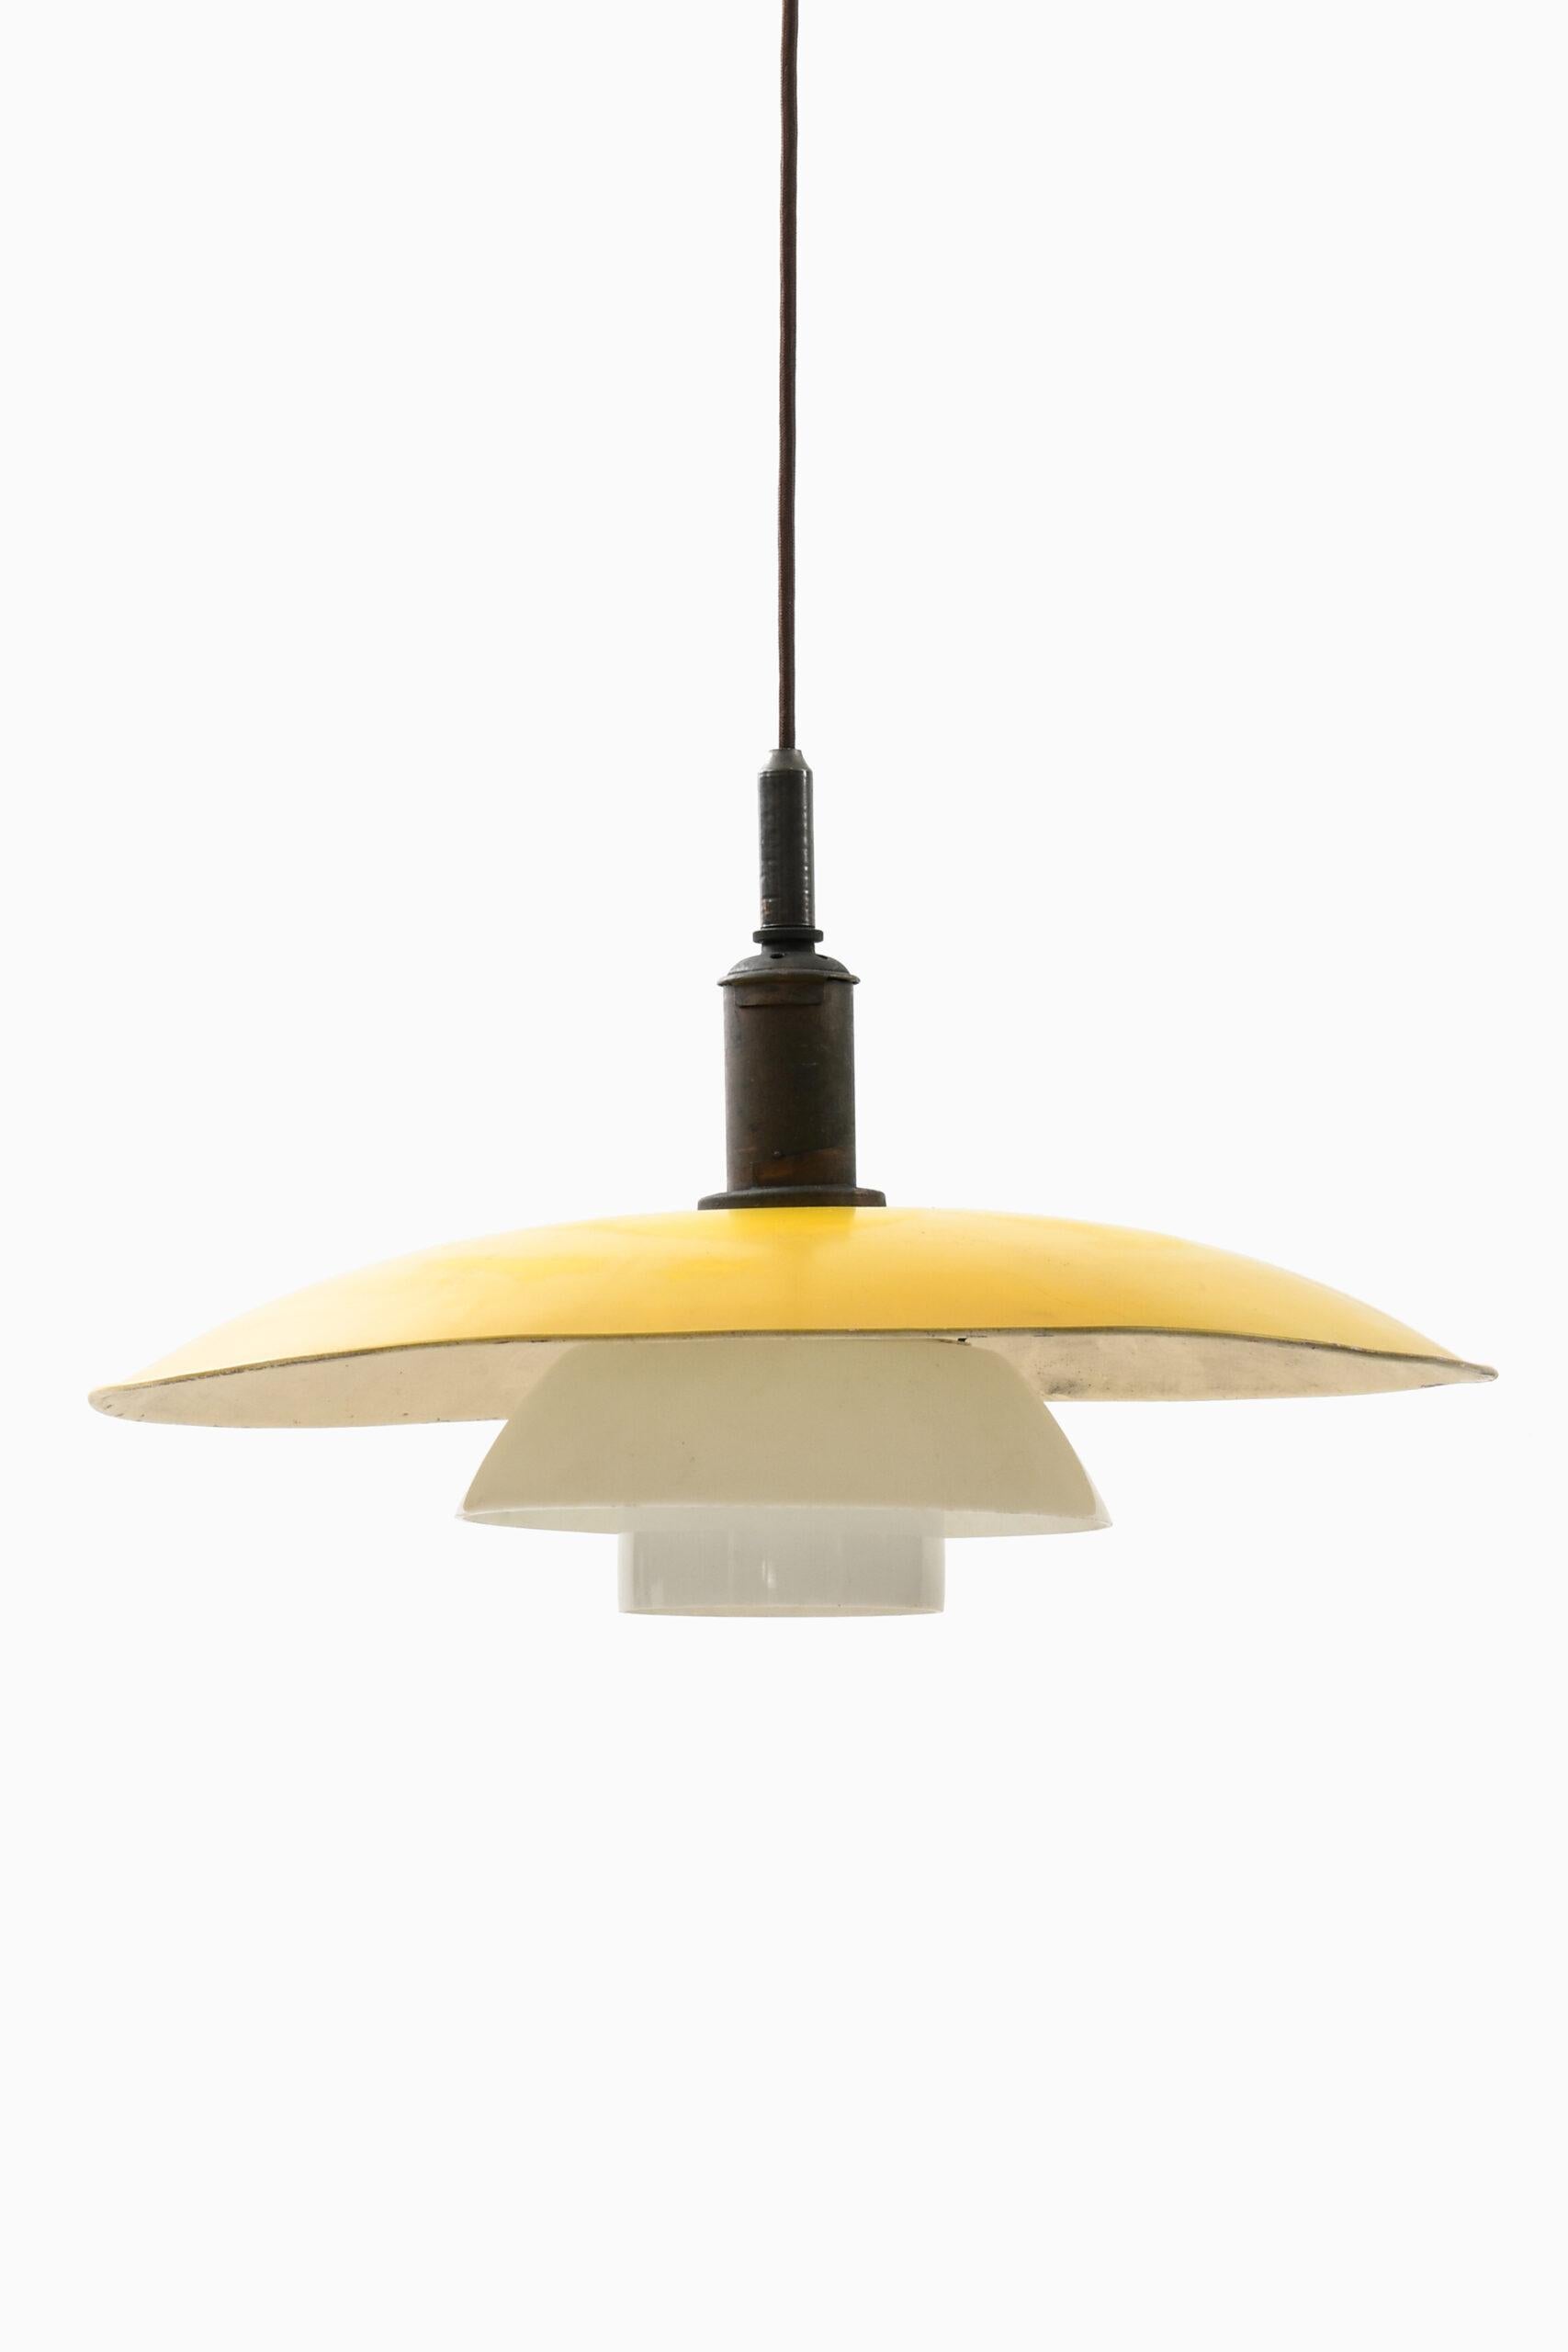 Poul Henningsen Ceiling Lamp PH-5/5 Produced by Louis Poulsen in Denmark For Sale 1